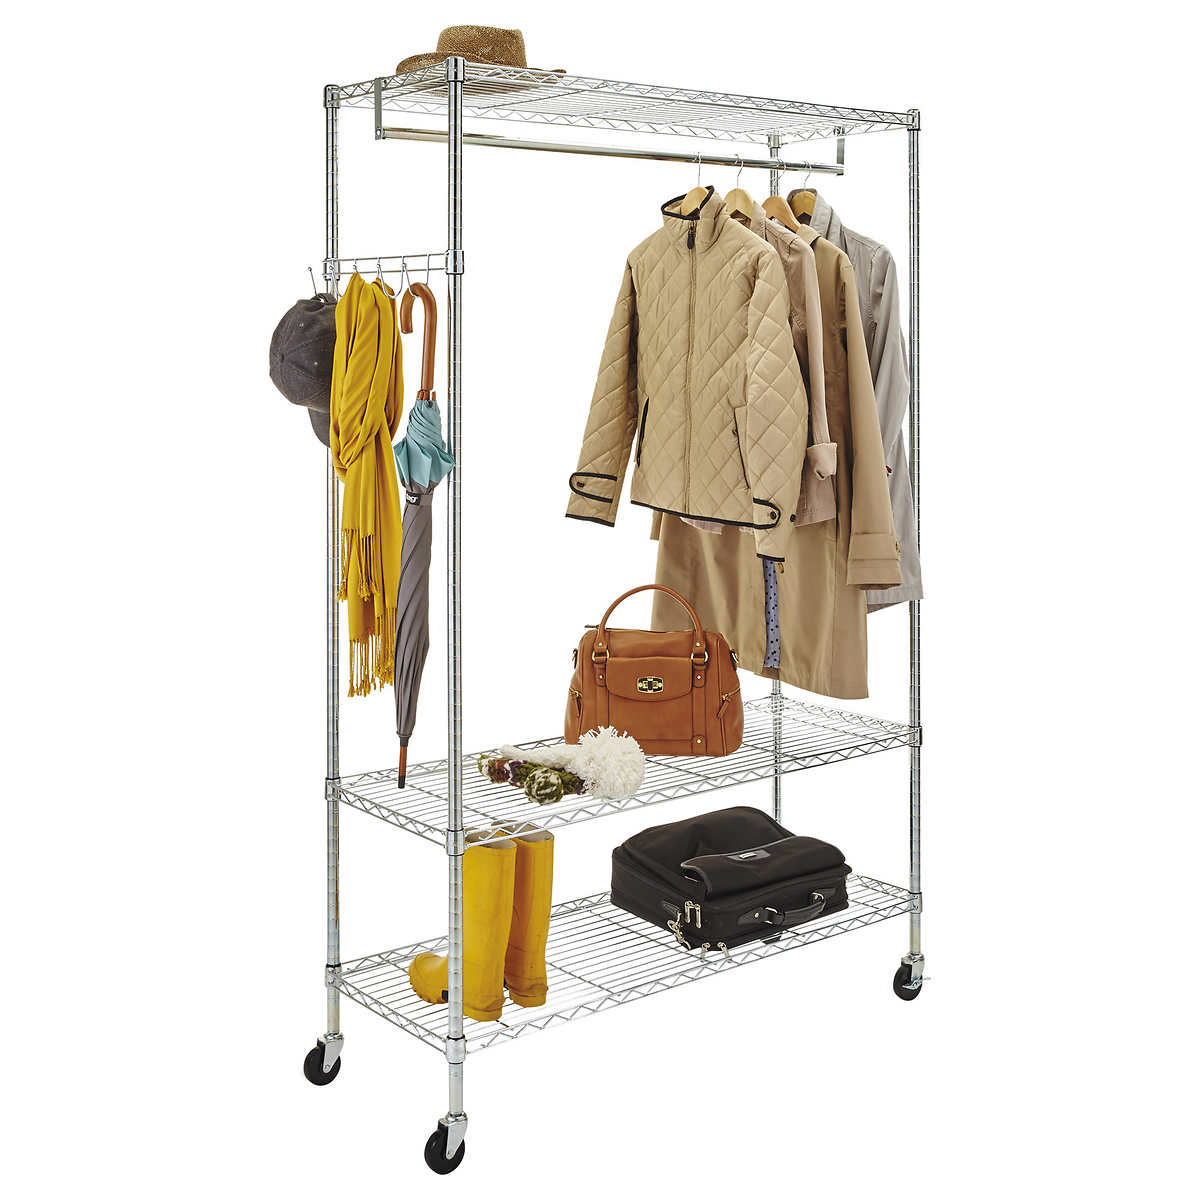 Wardrobe Shelving & Storage System Twin Slot Upright Clothes Rail Garment Rack 